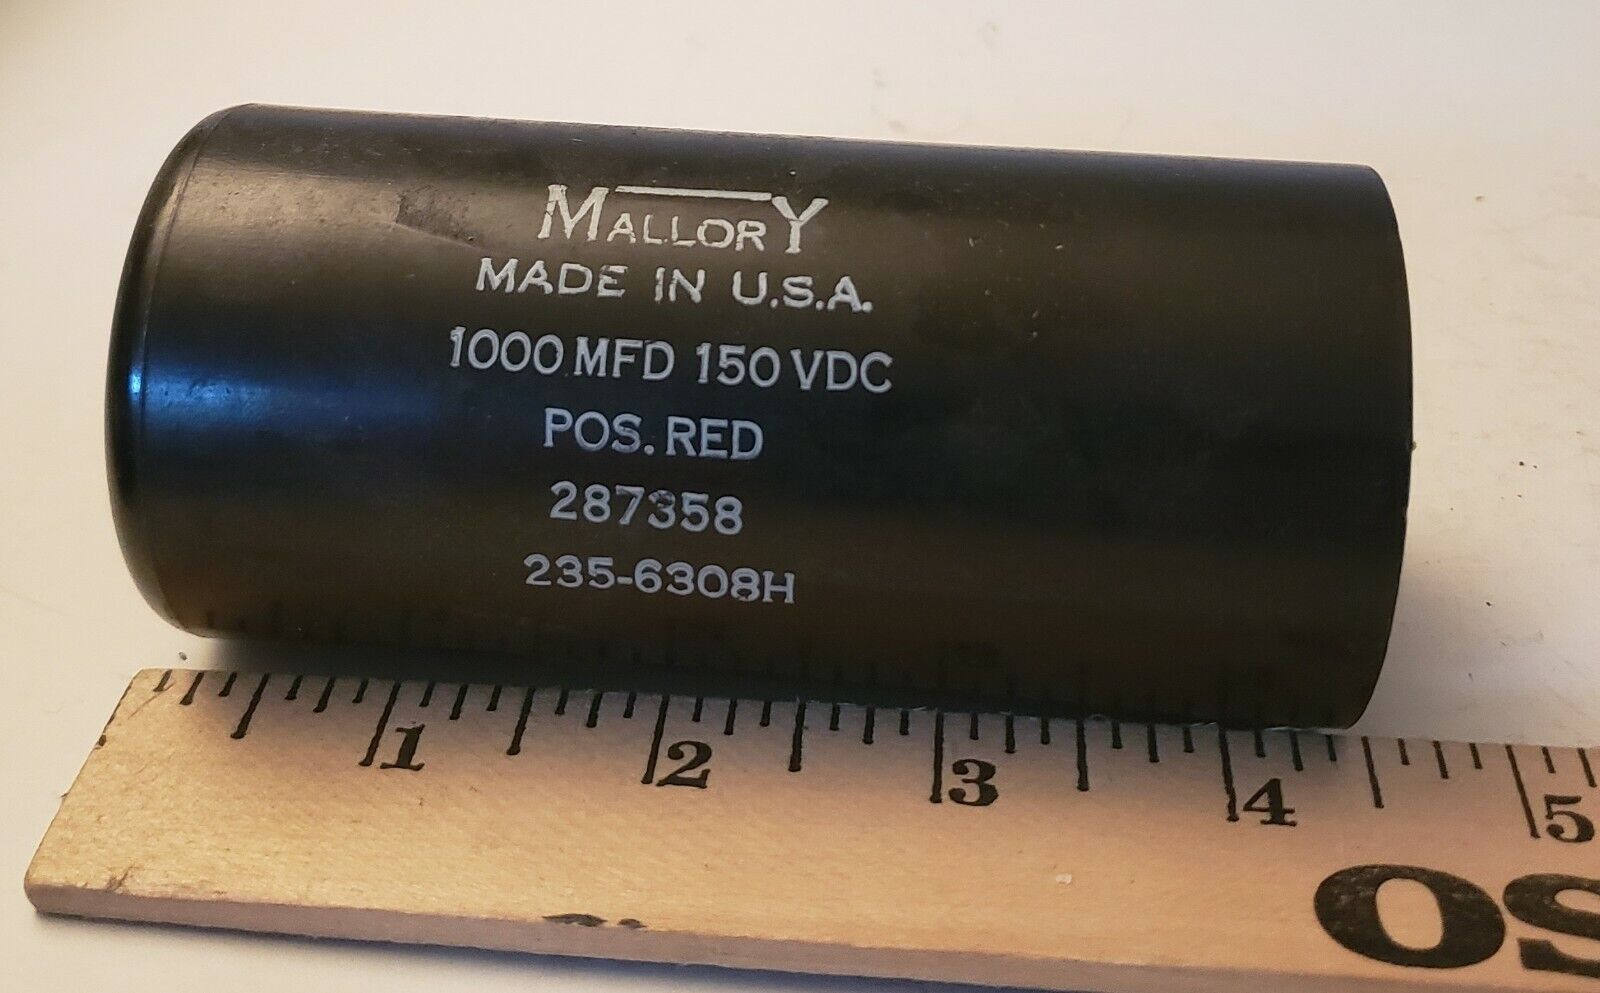 1000 uF MFD 150 VDC Electrolytic Capacitor 150 VDC 1000MFD 112mm h 5mm d U.S.A.